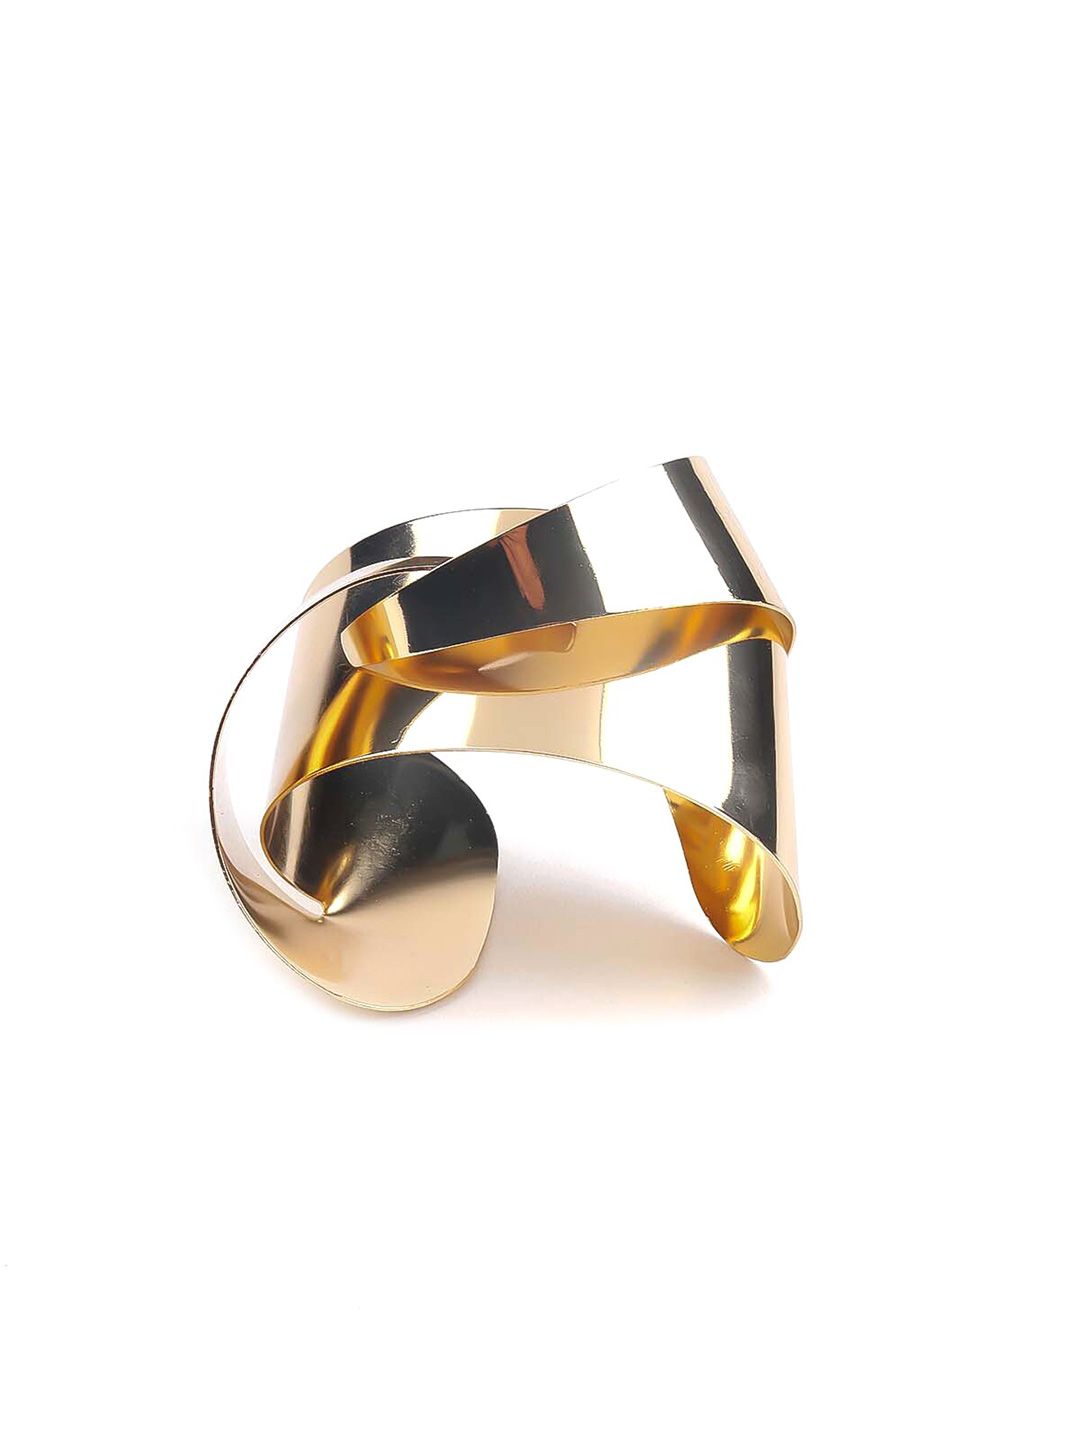 ODETTE Women Gold-Toned Cuff Bracelet Price in India